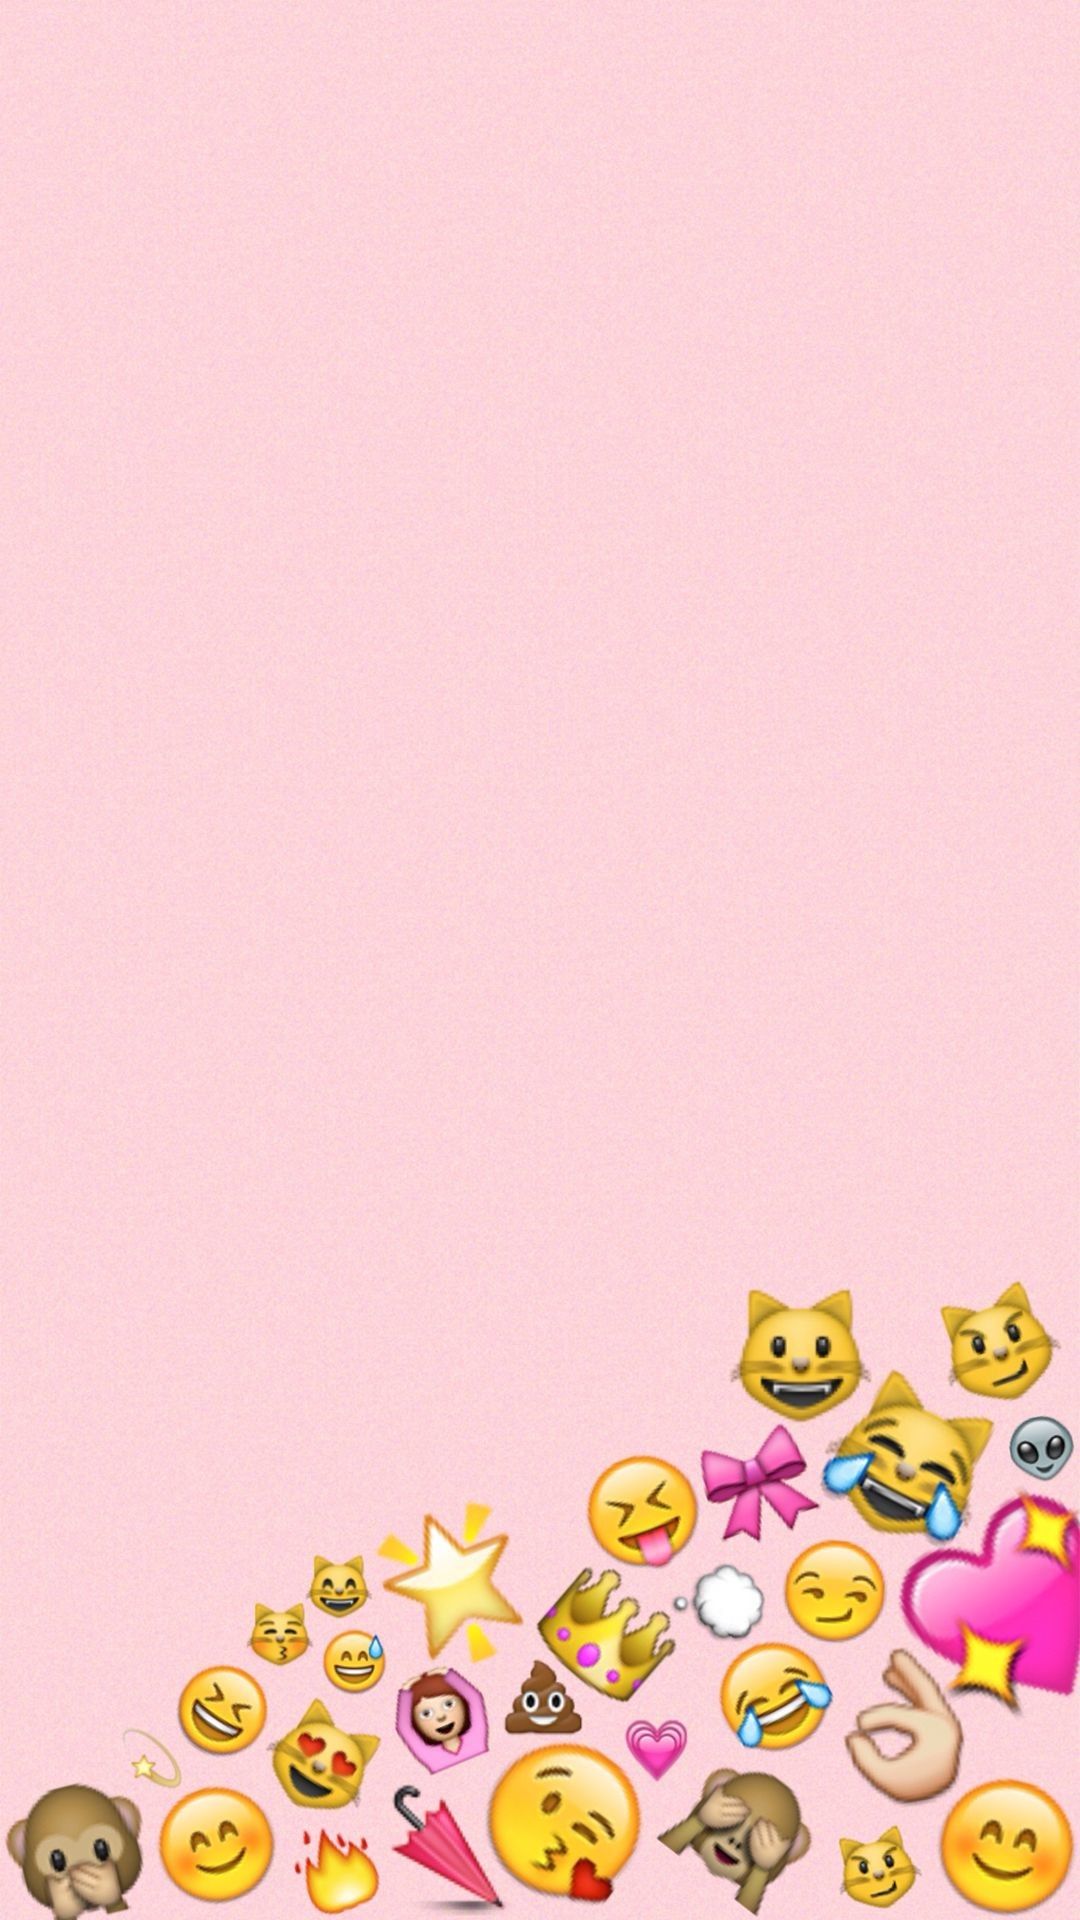 Cute Girly Wallpapers For Iphone - PixelsTalk.Net